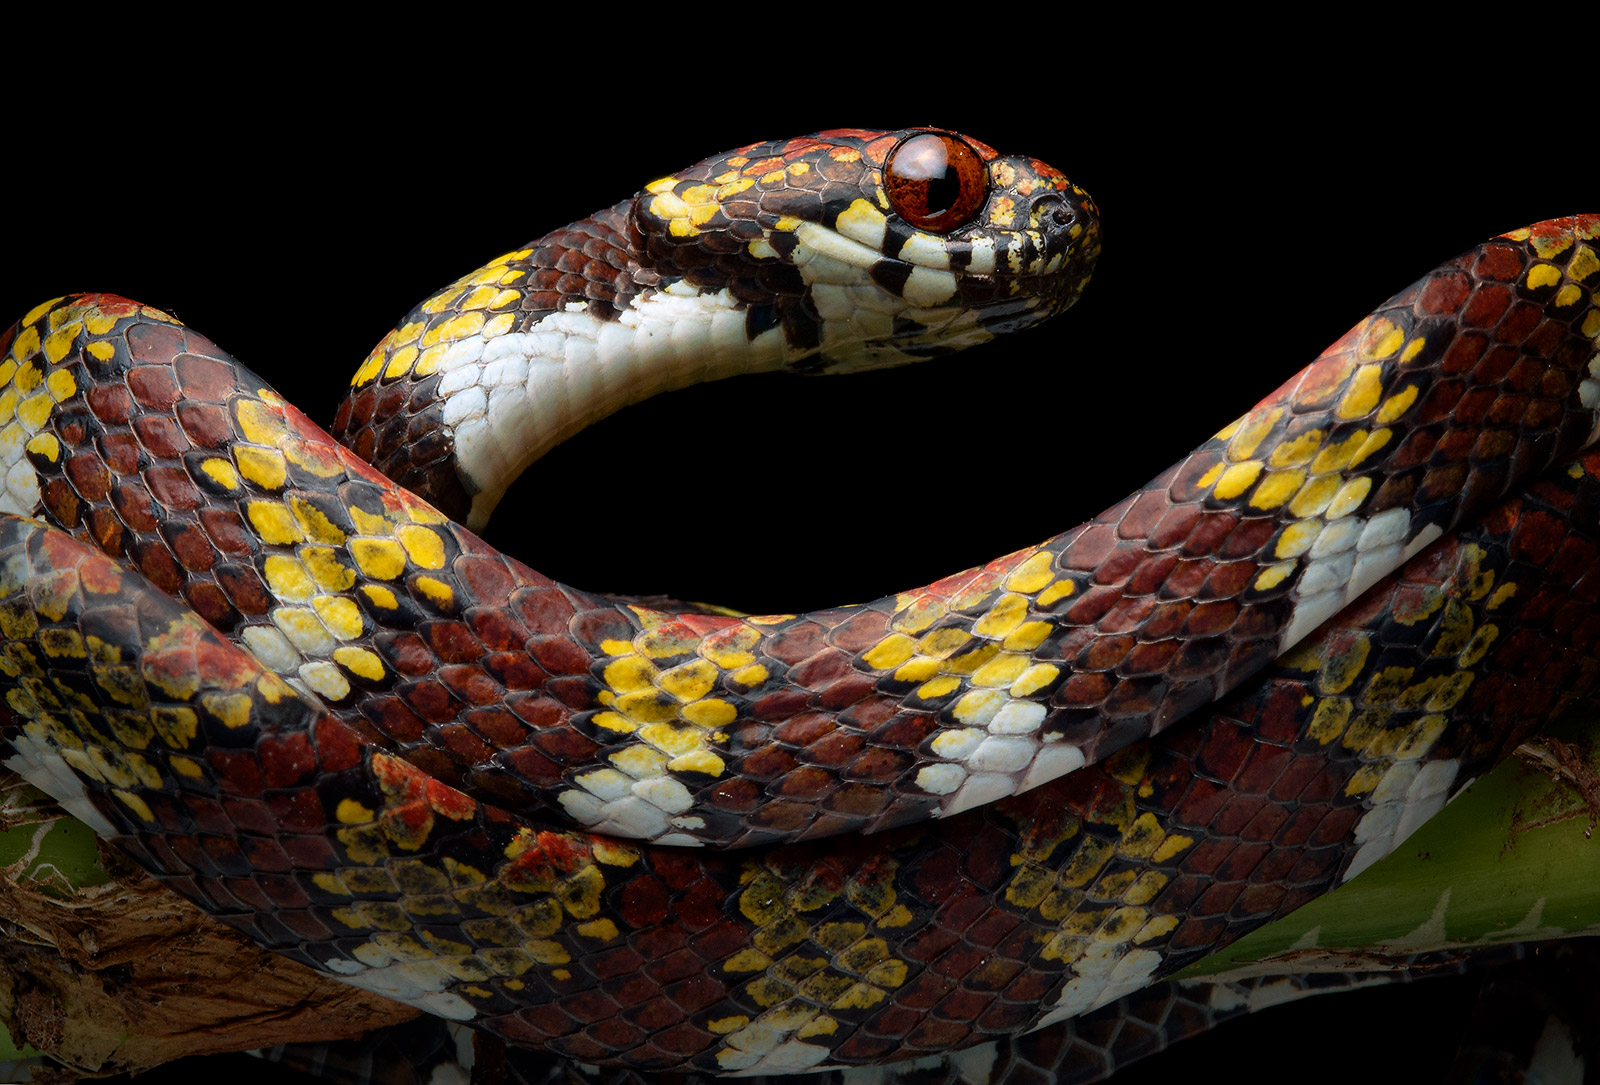 Image showing an individual of the snake Sibon marleyae